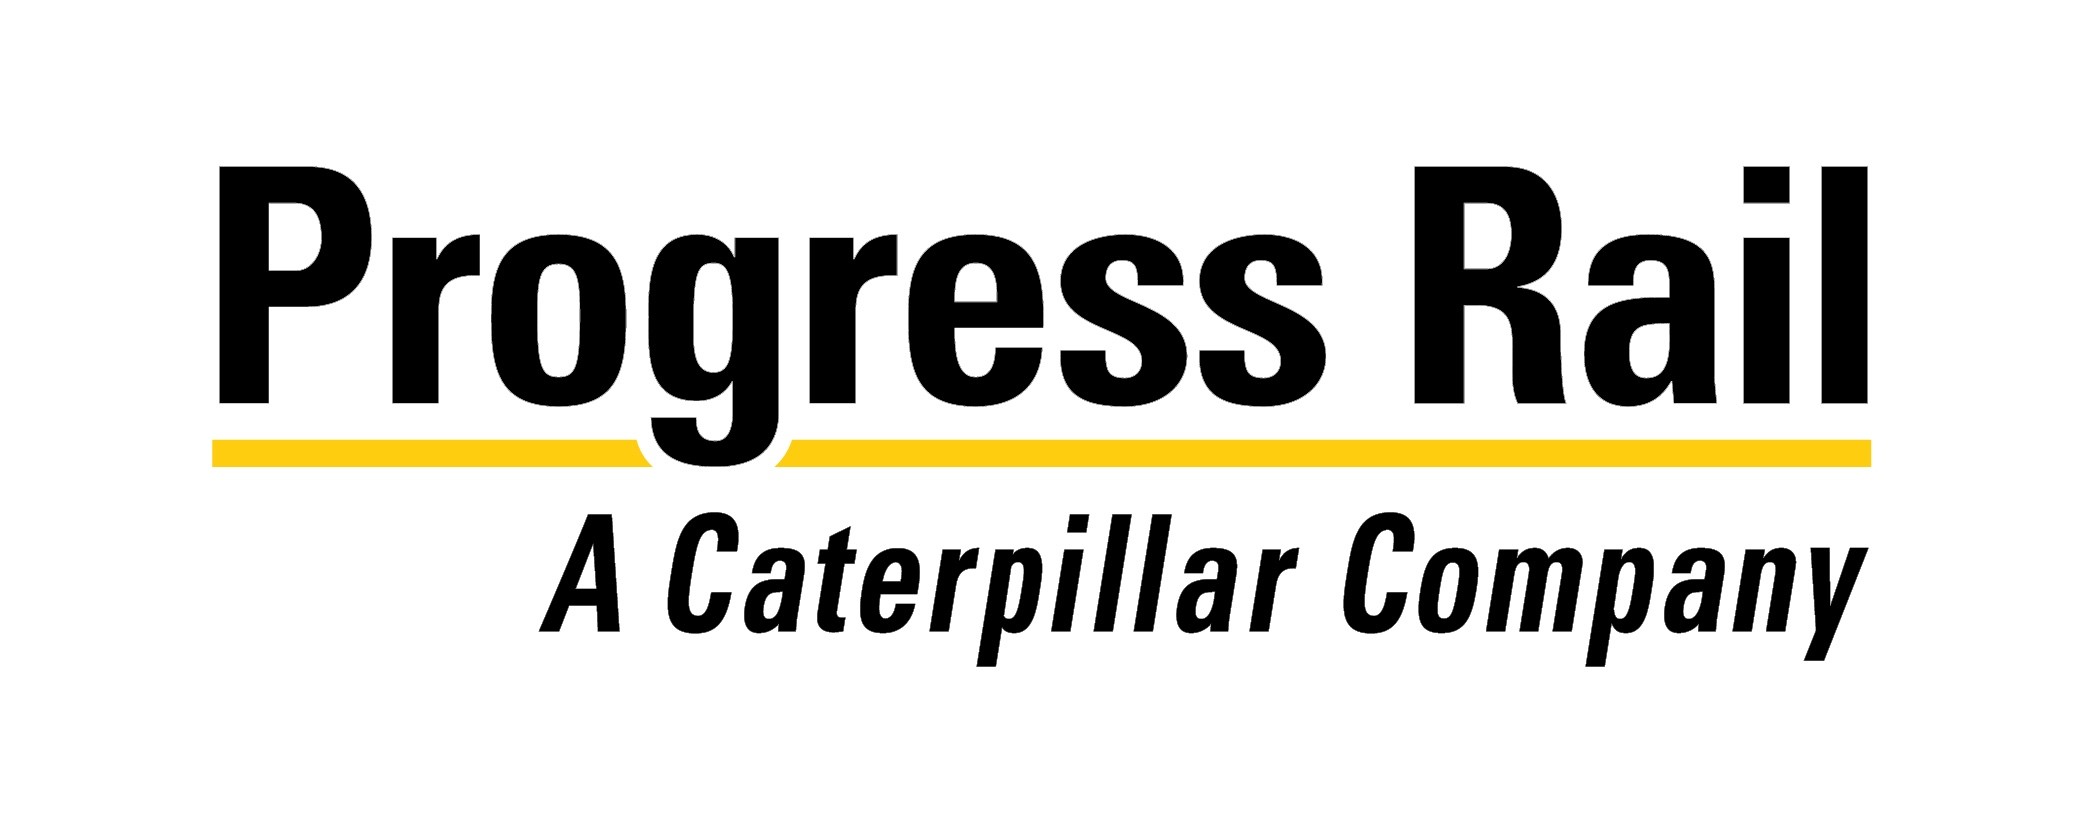 ProgressRail  Progress Rail, A Caterpillar Company